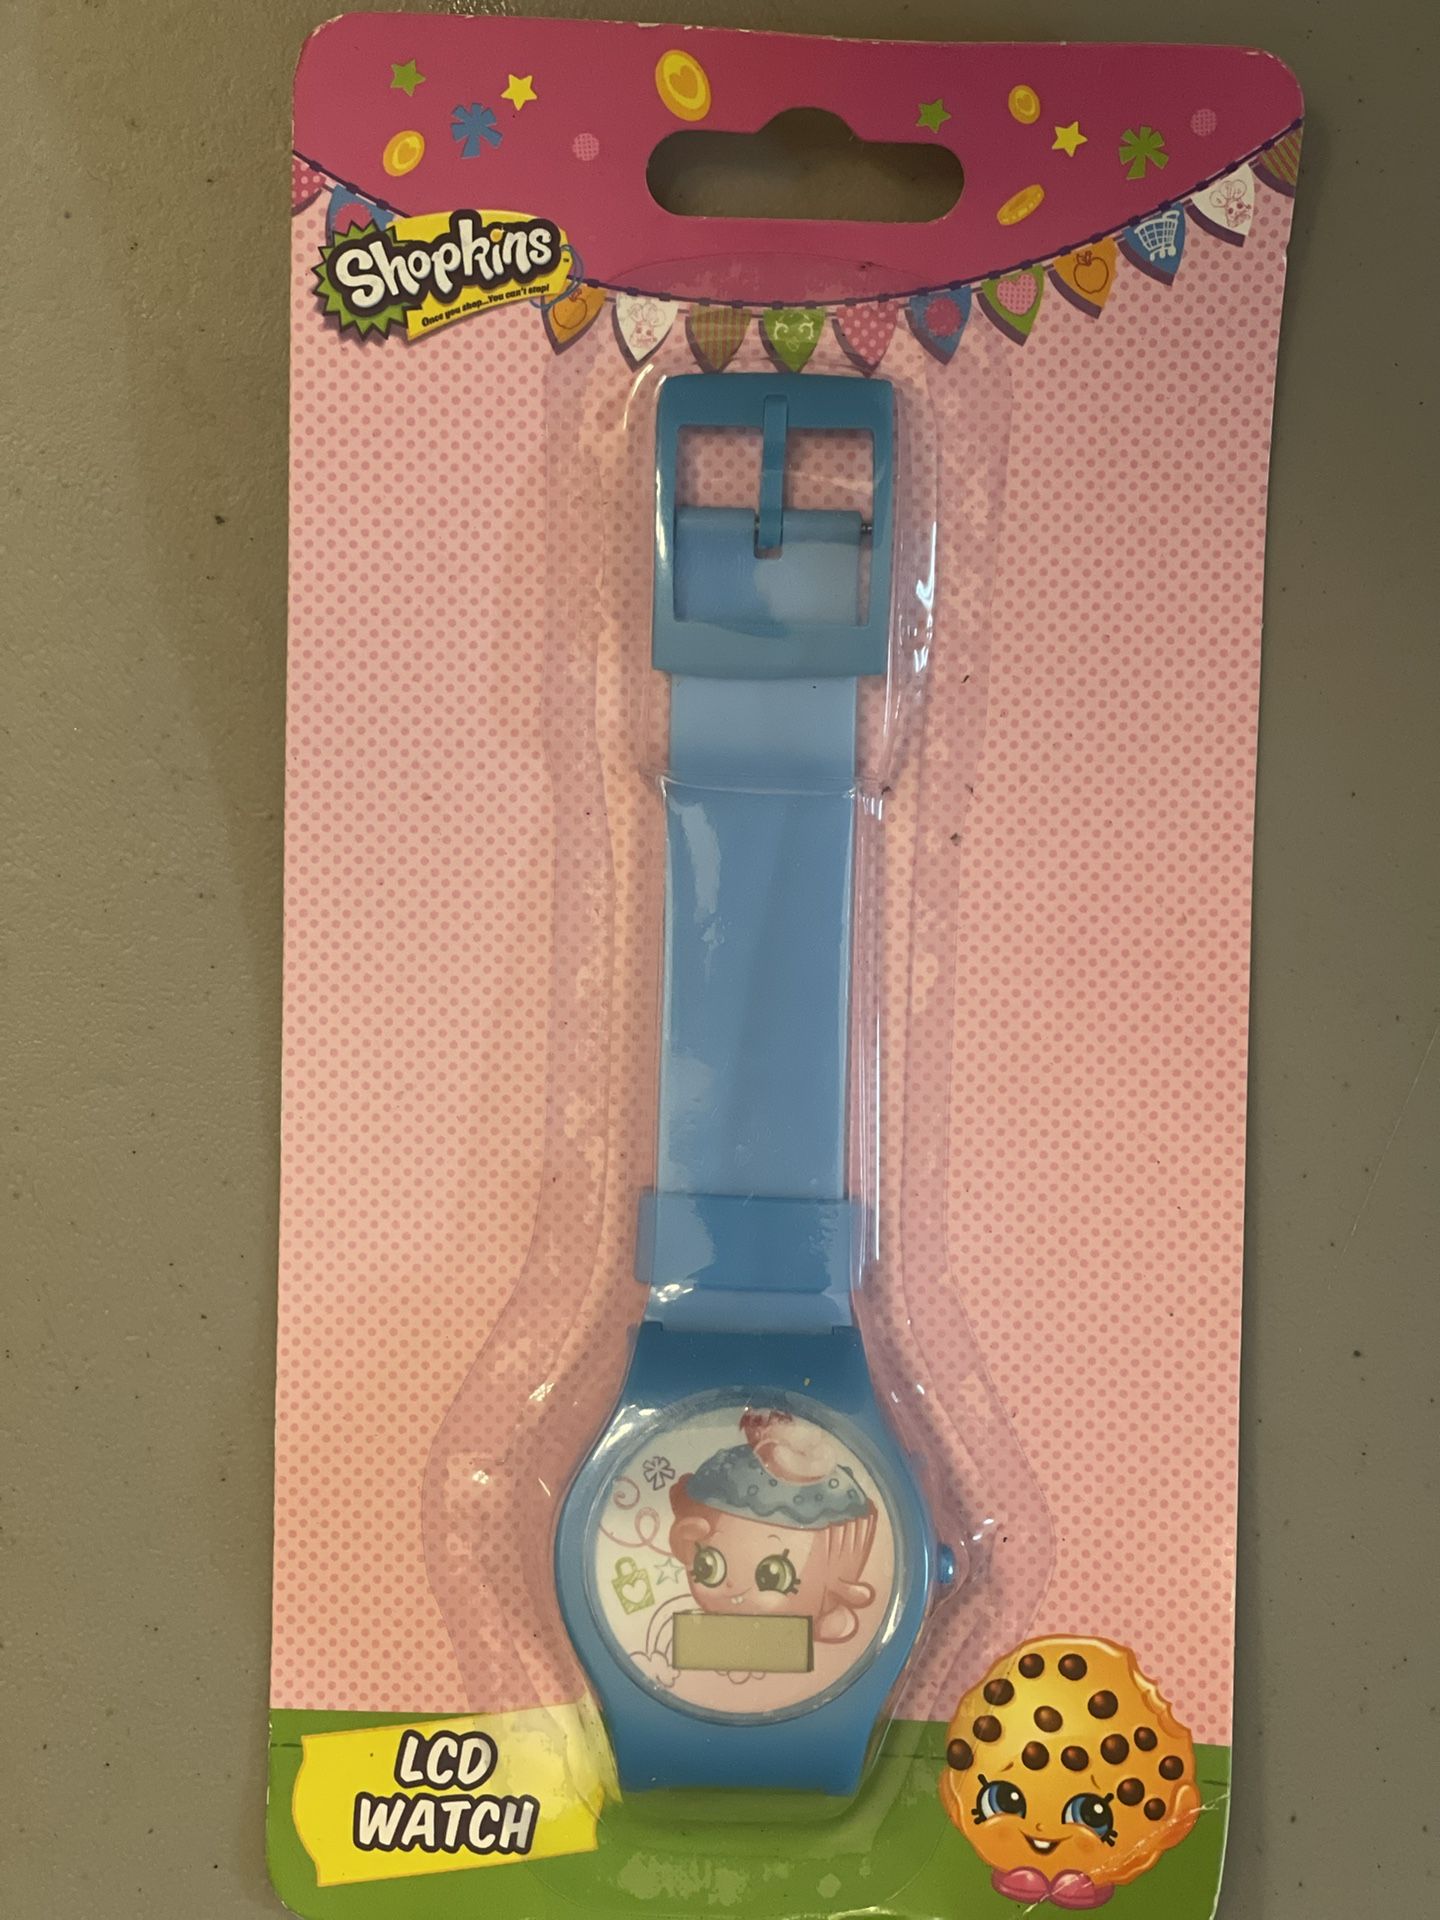 1 Said Shopkins Cupcake Digital Watch on Blister Card 